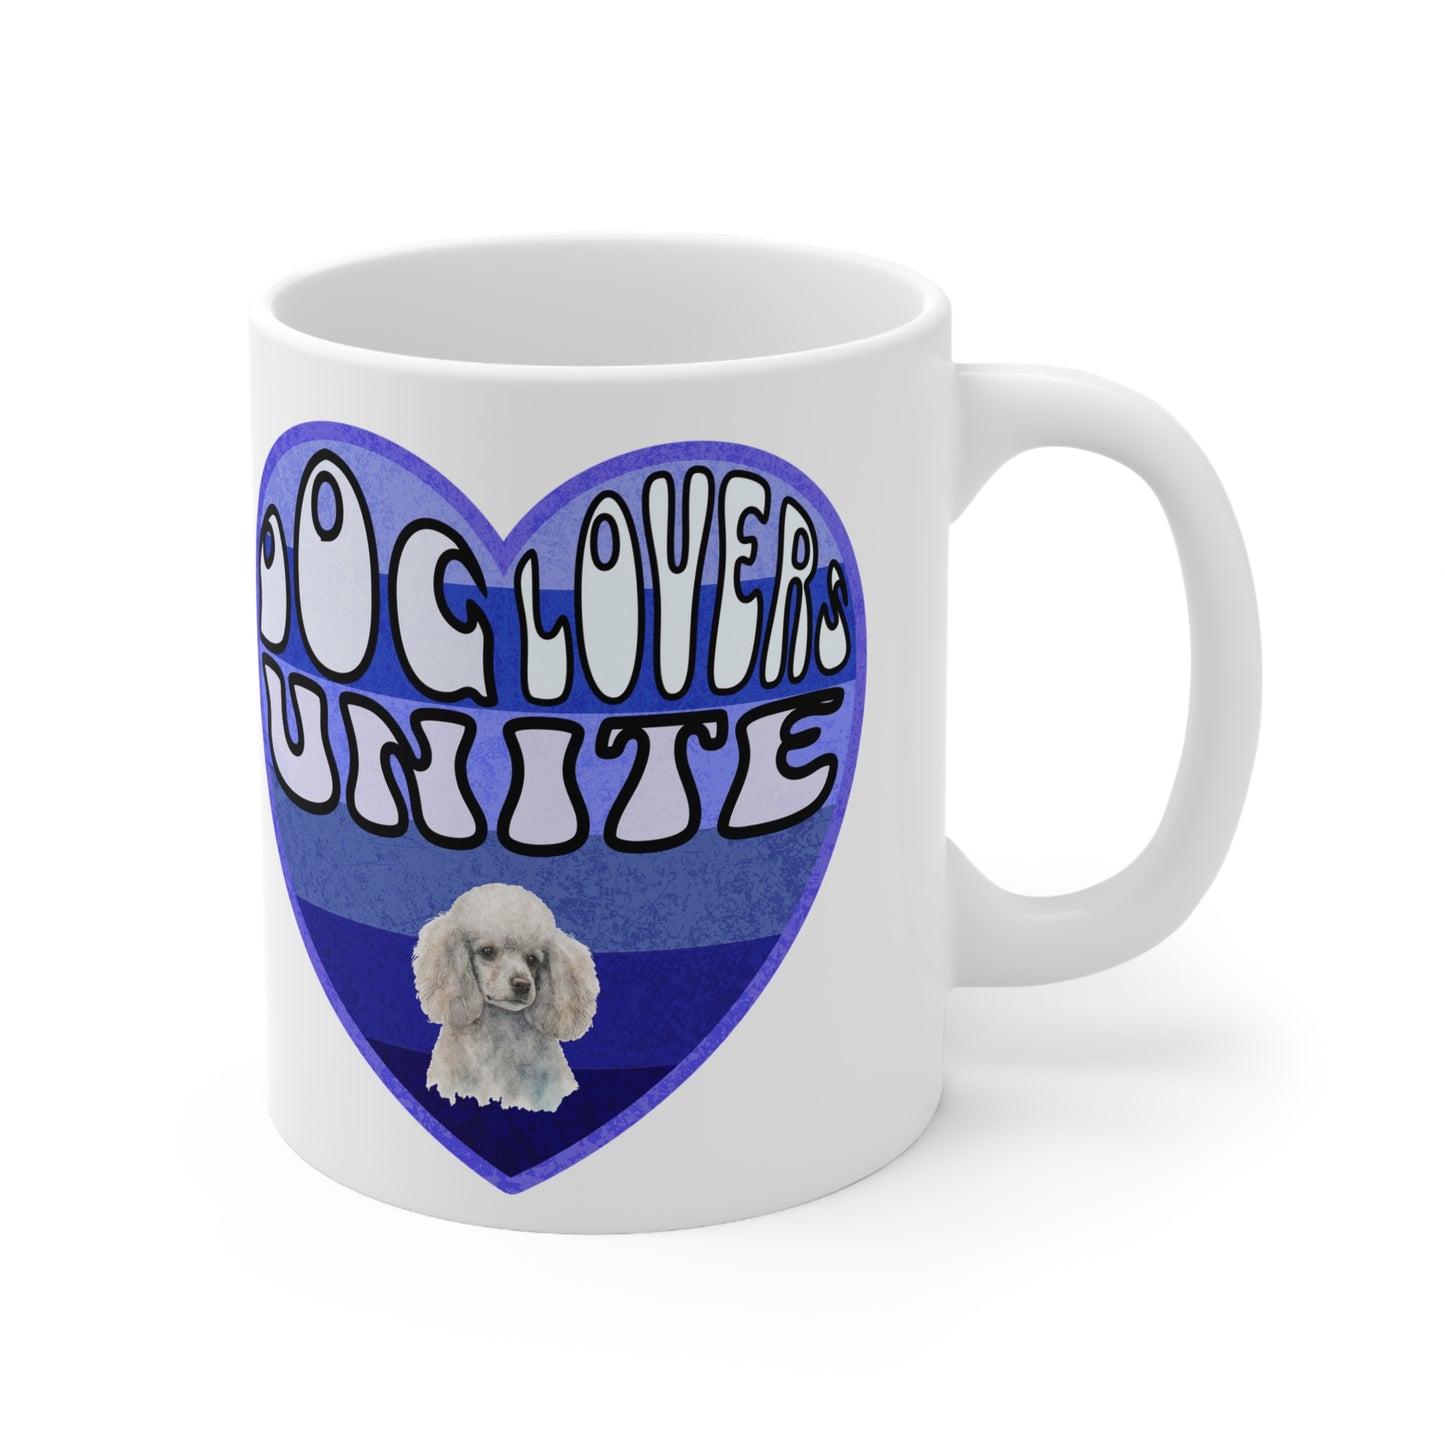 Dog Lovers Unite - Ceramic Mug 11oz